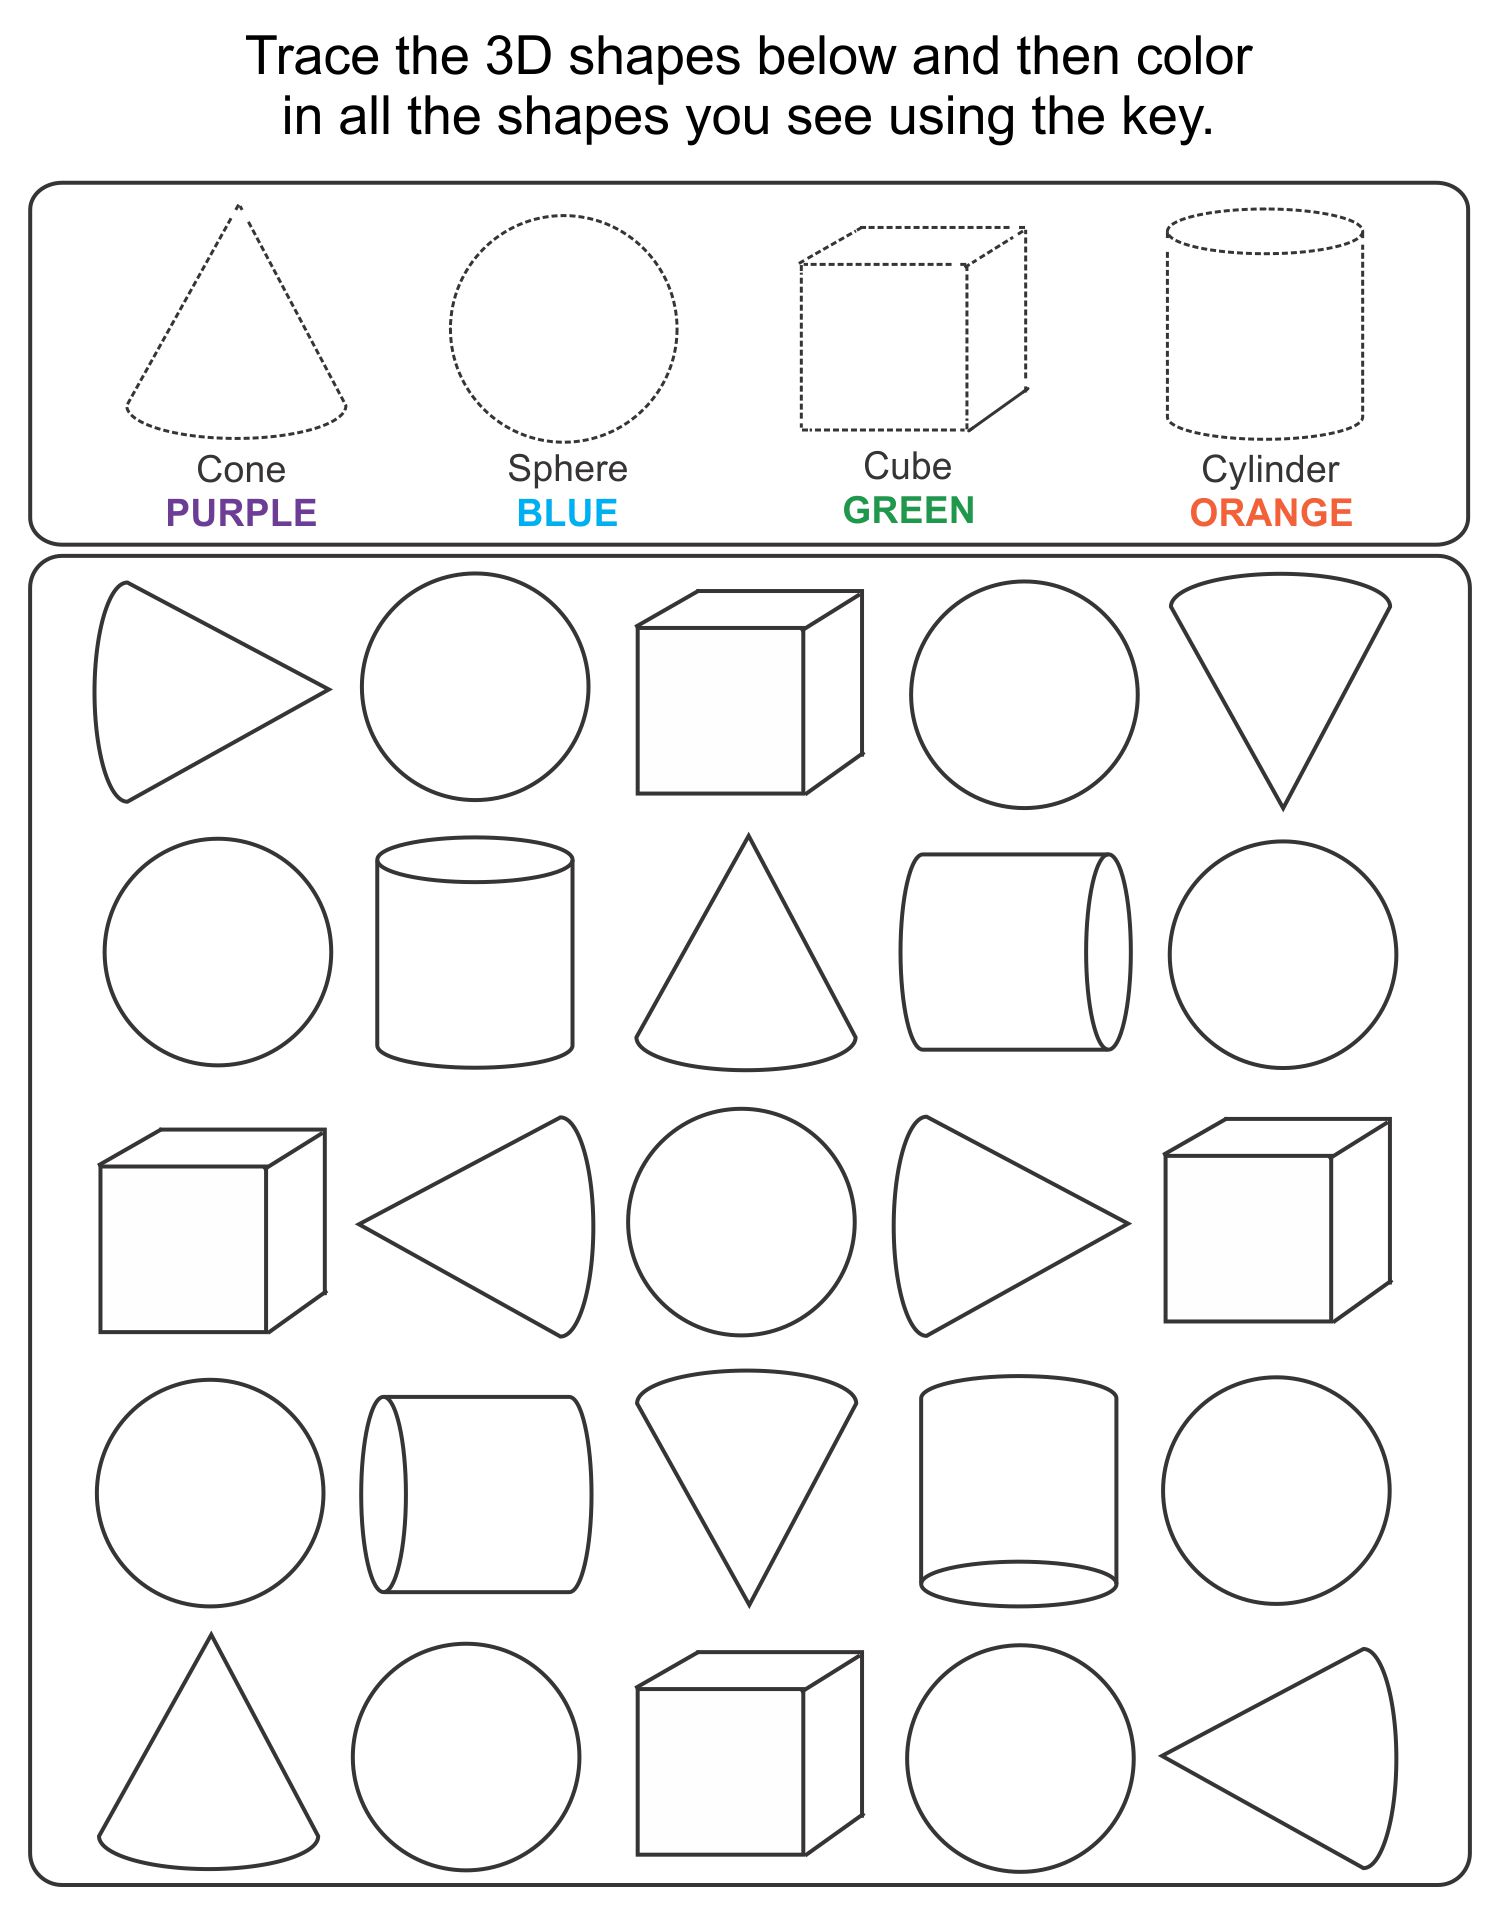 3d-shapes-for-kids-shapes-for-kids-3d-shapes-for-kids-shapes-worksheets-images-and-photos-finder